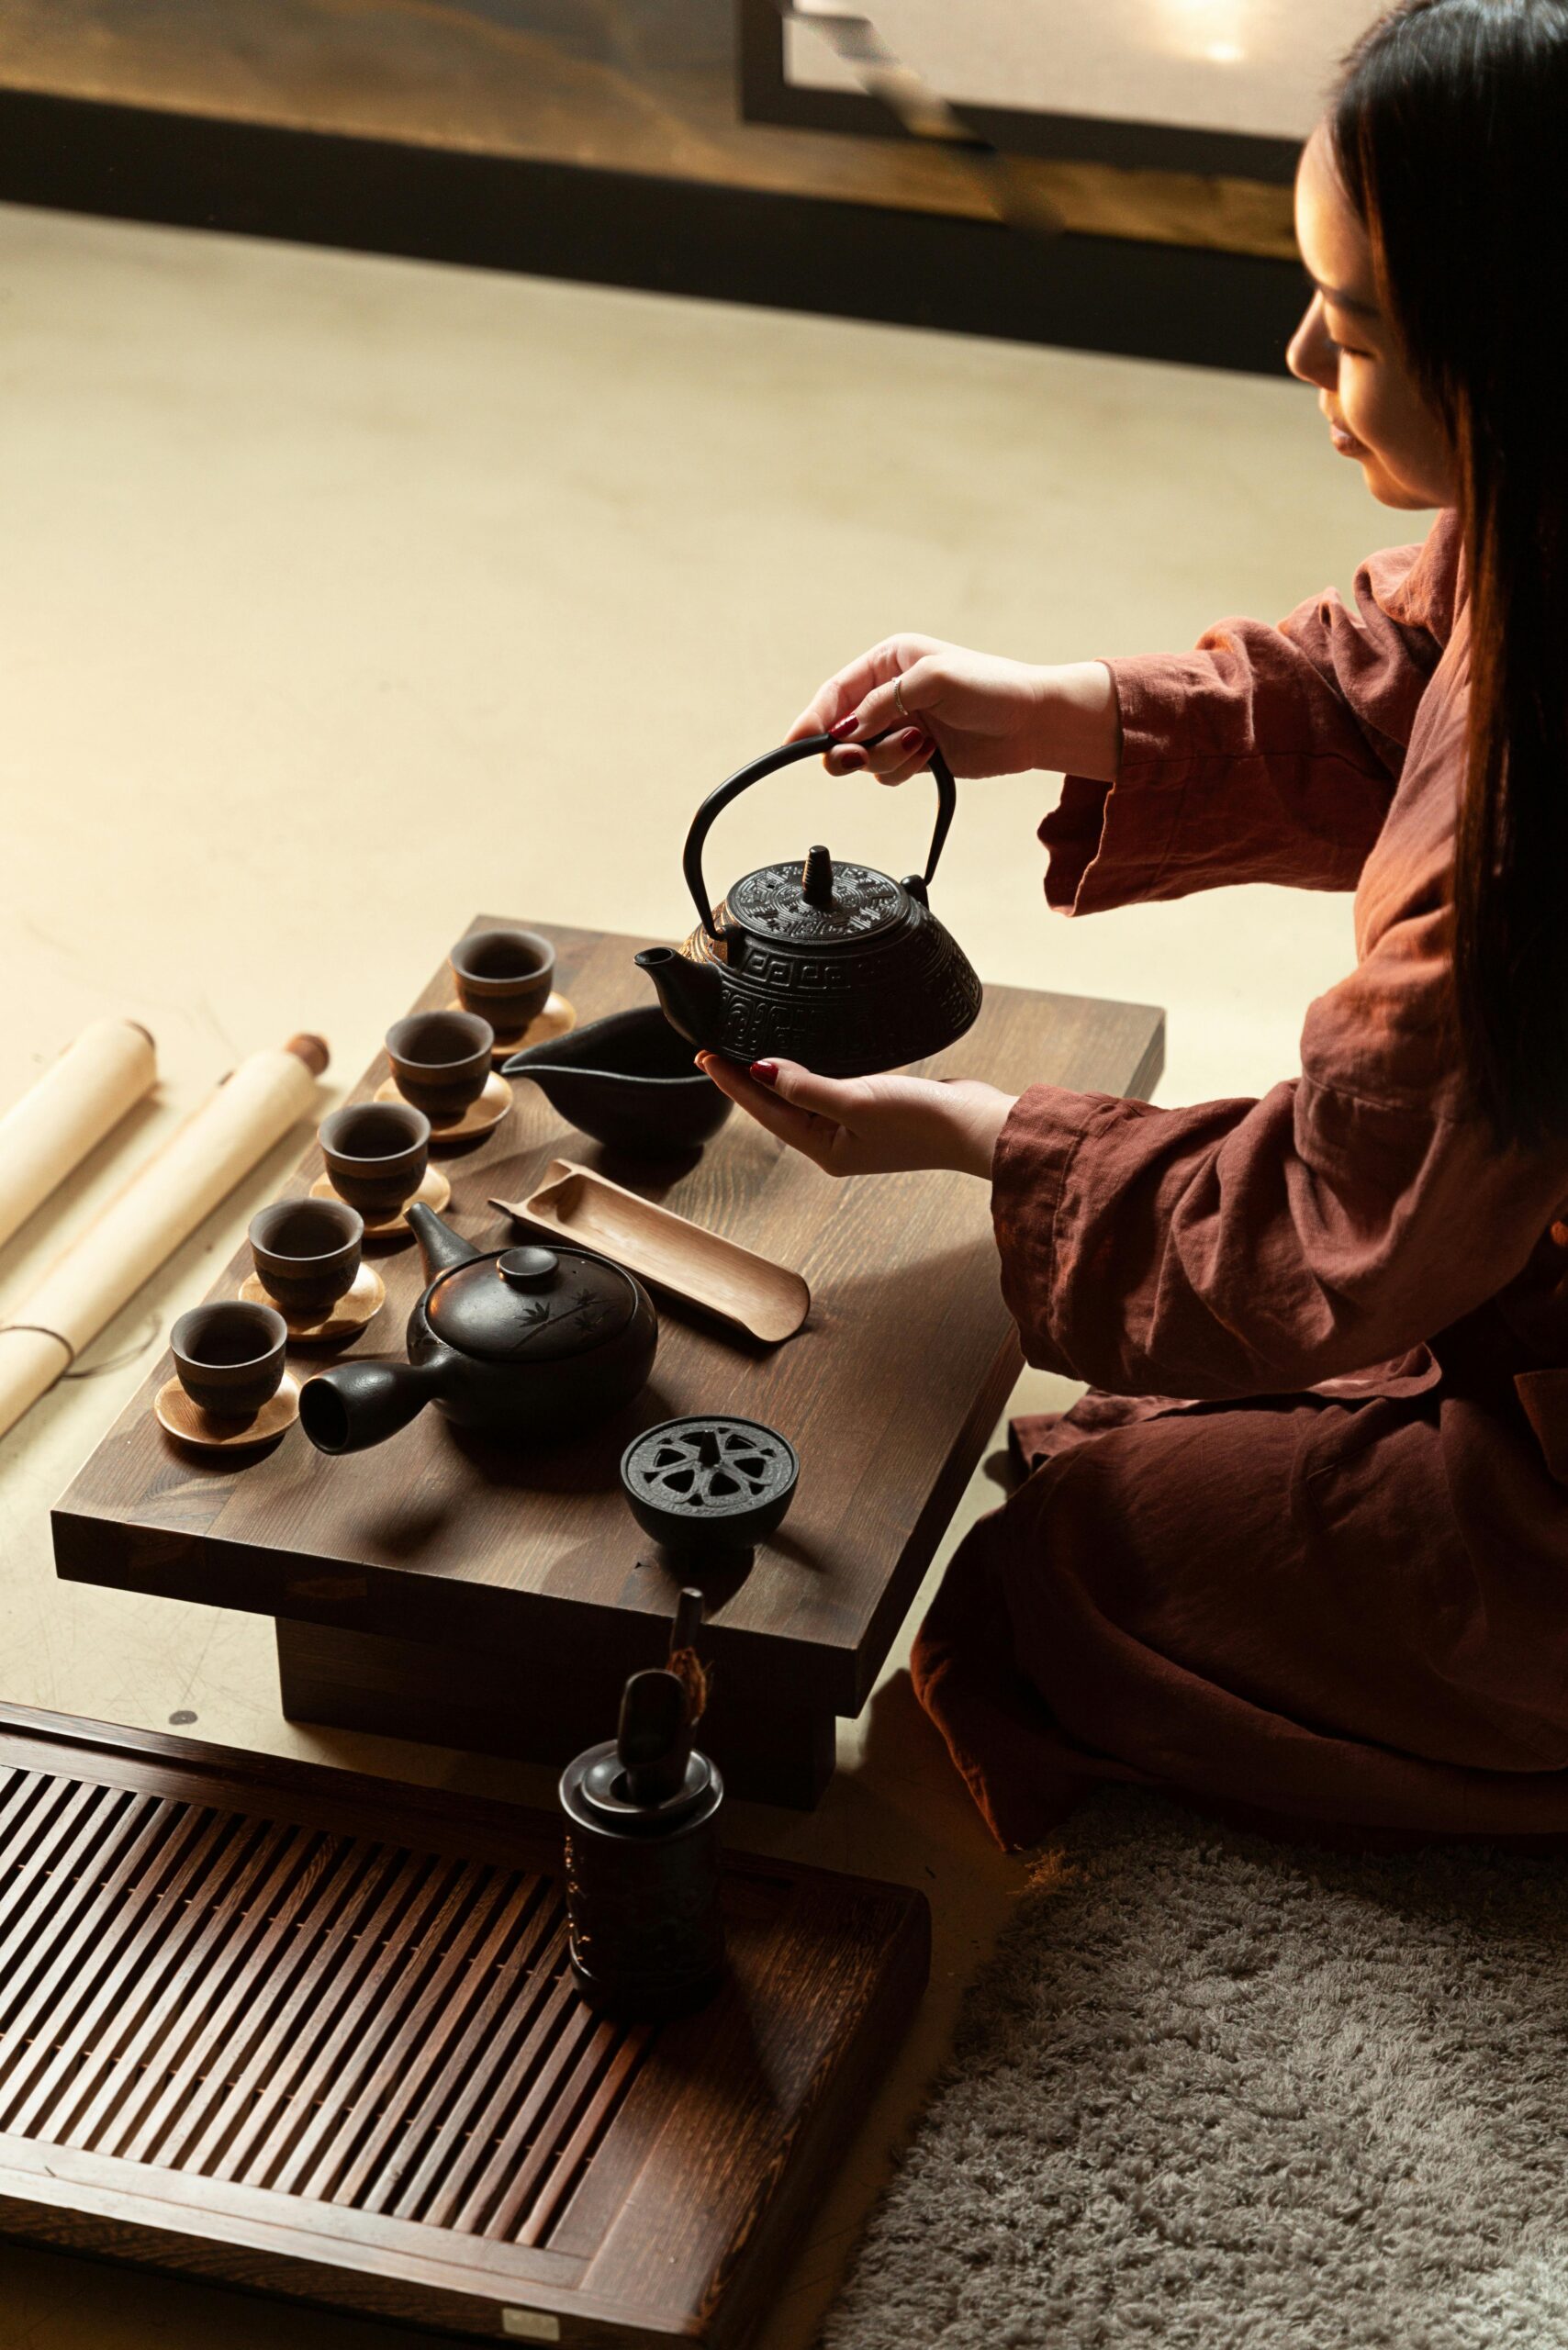 Chińska herbata – historia i kultura picia herbaty